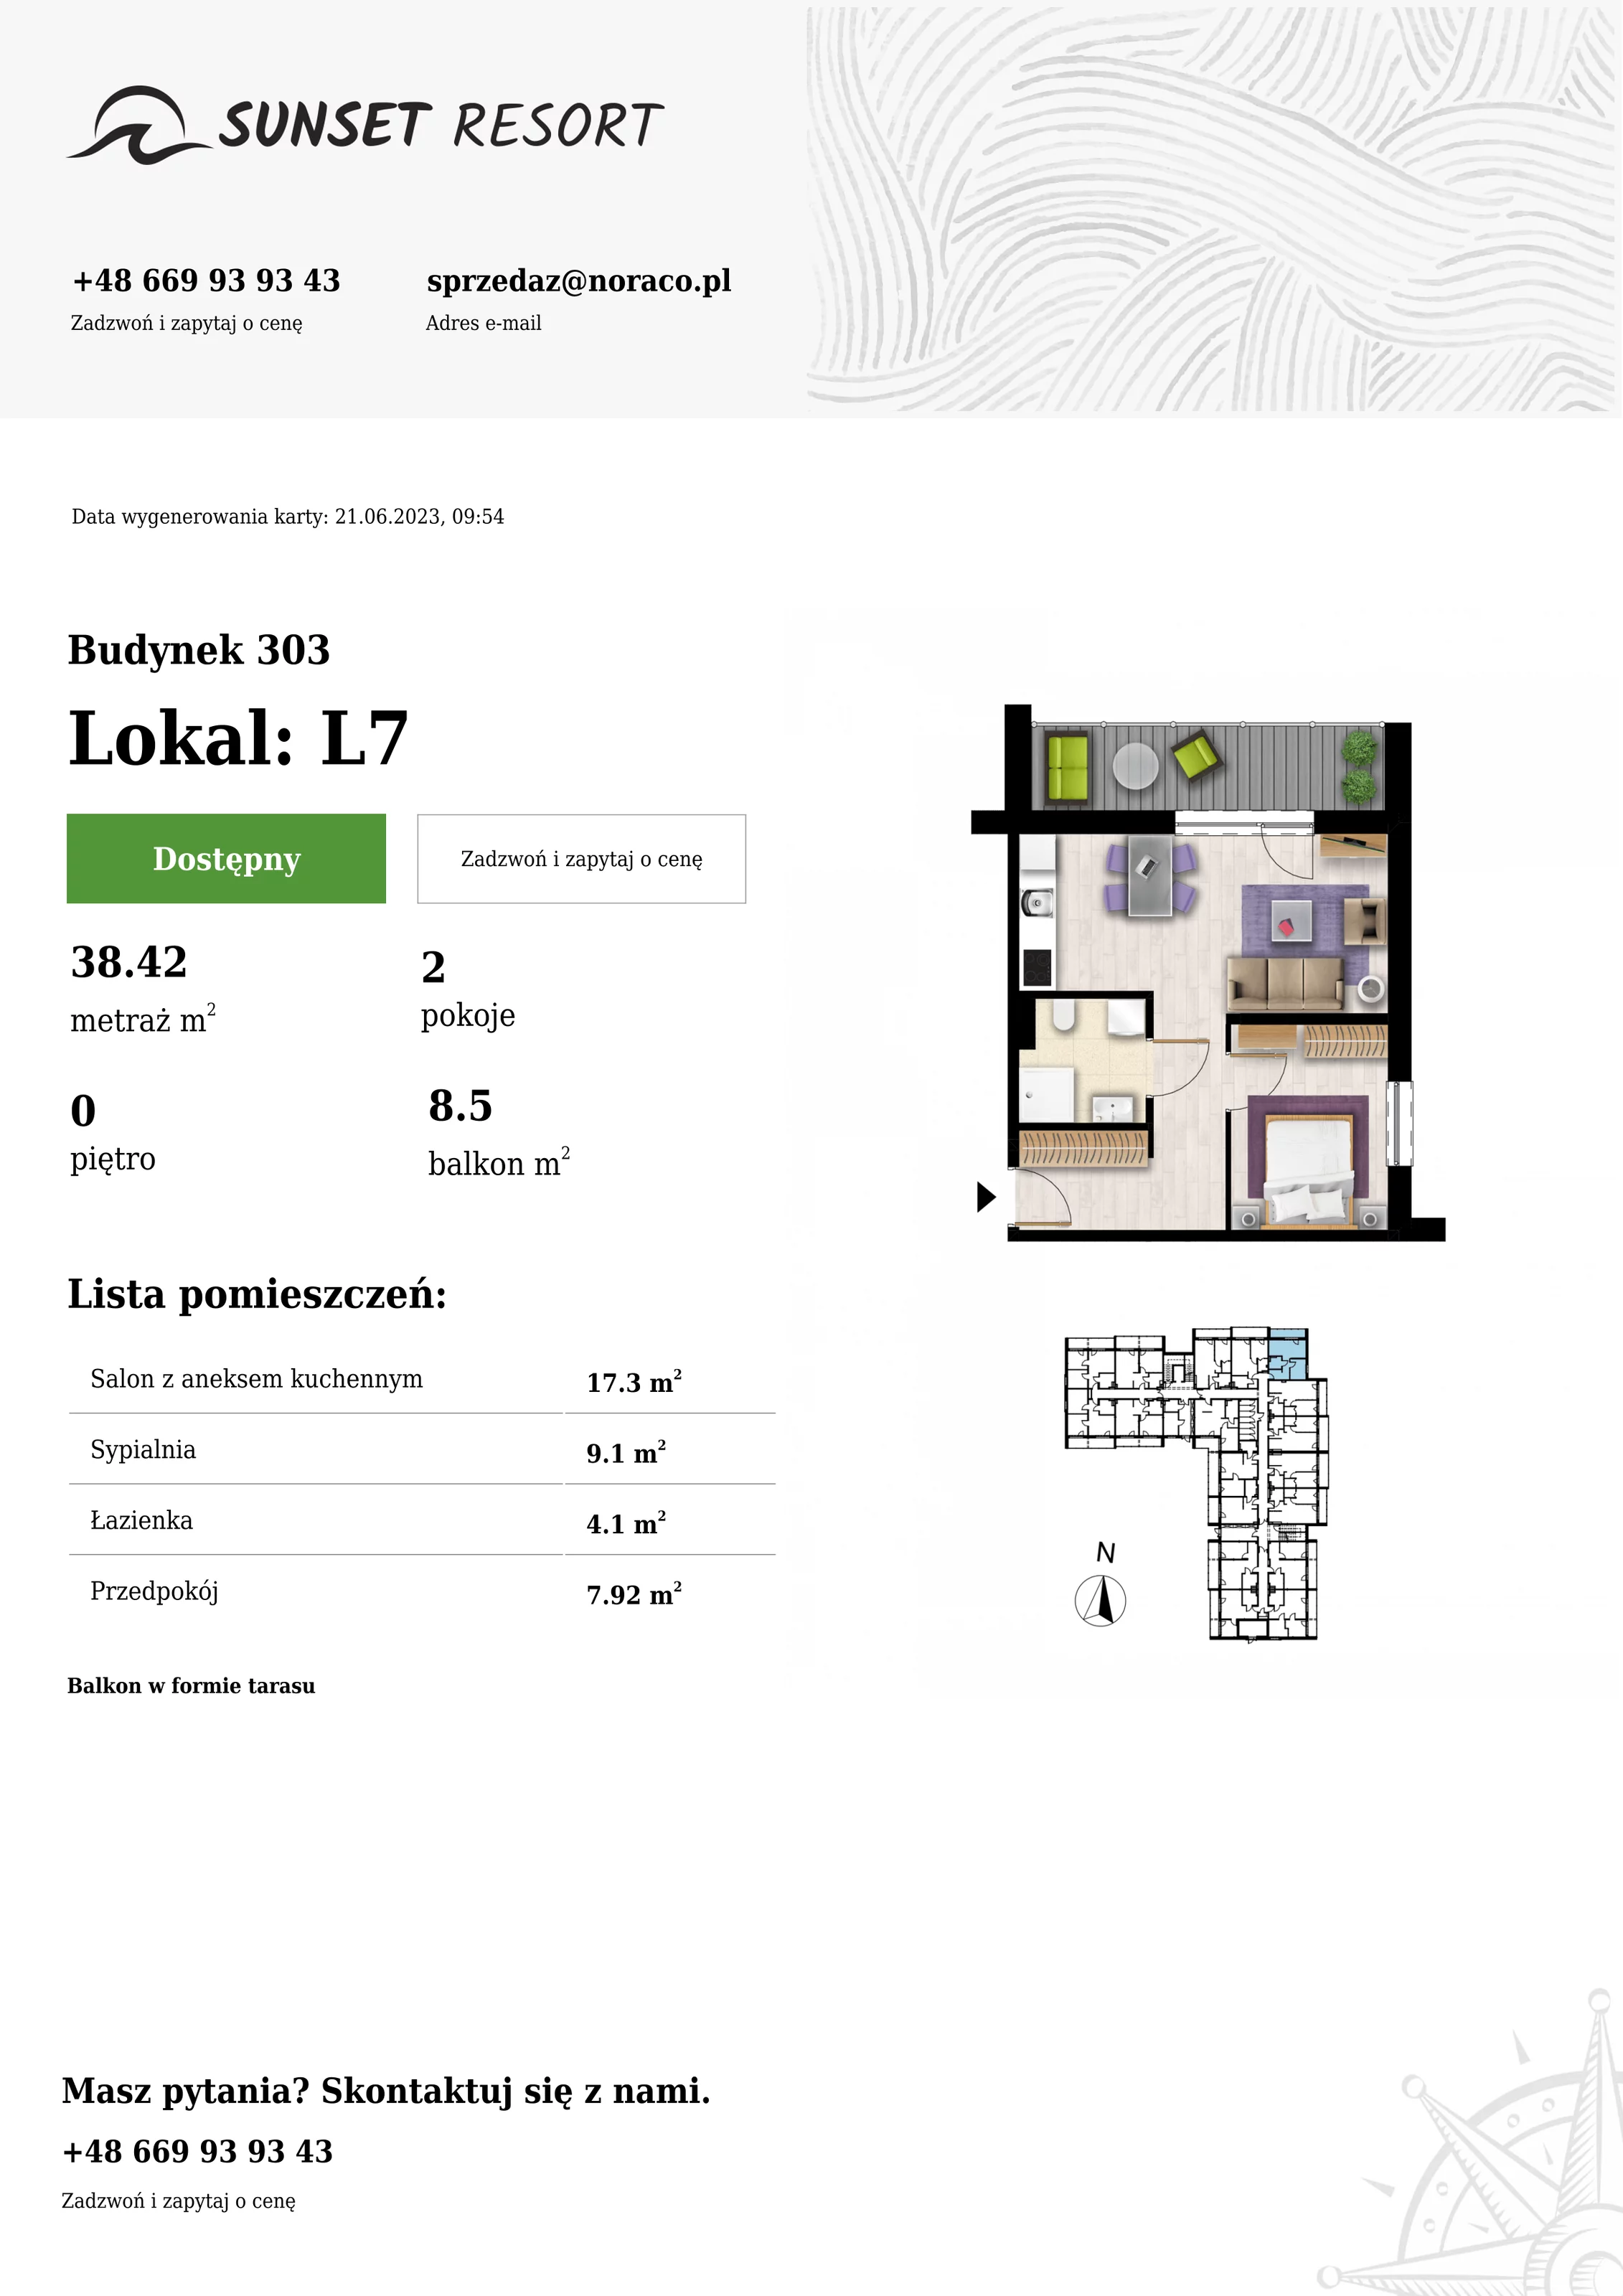 Apartament 38,42 m², parter, oferta nr L7, Sunset Resort, Grzybowo, ul. Nadmorska 106